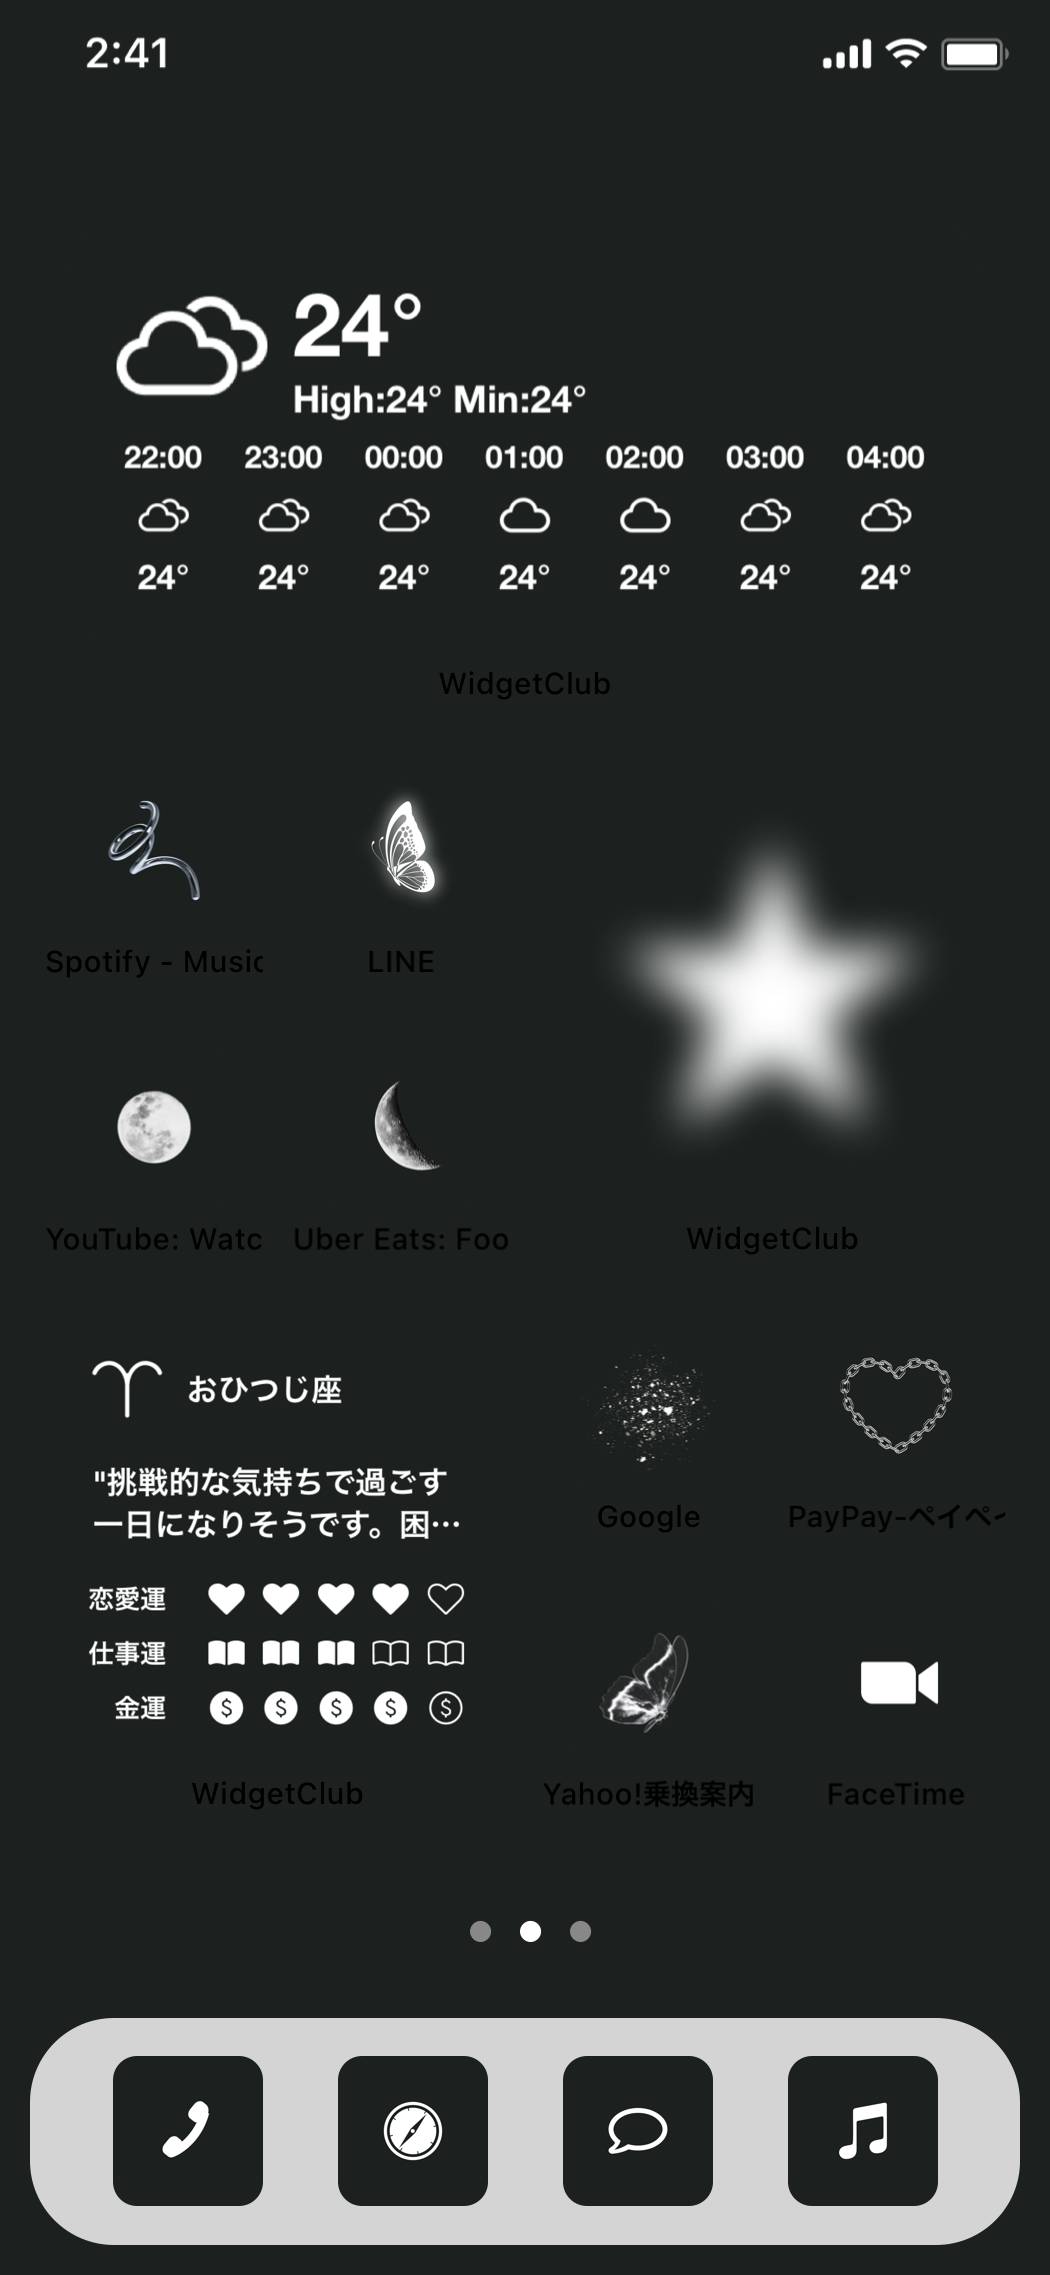 black × white simple themeНүүр дэлгэцийн санаанууд[FDaAQBOwBbvMJPR4pTSQ]